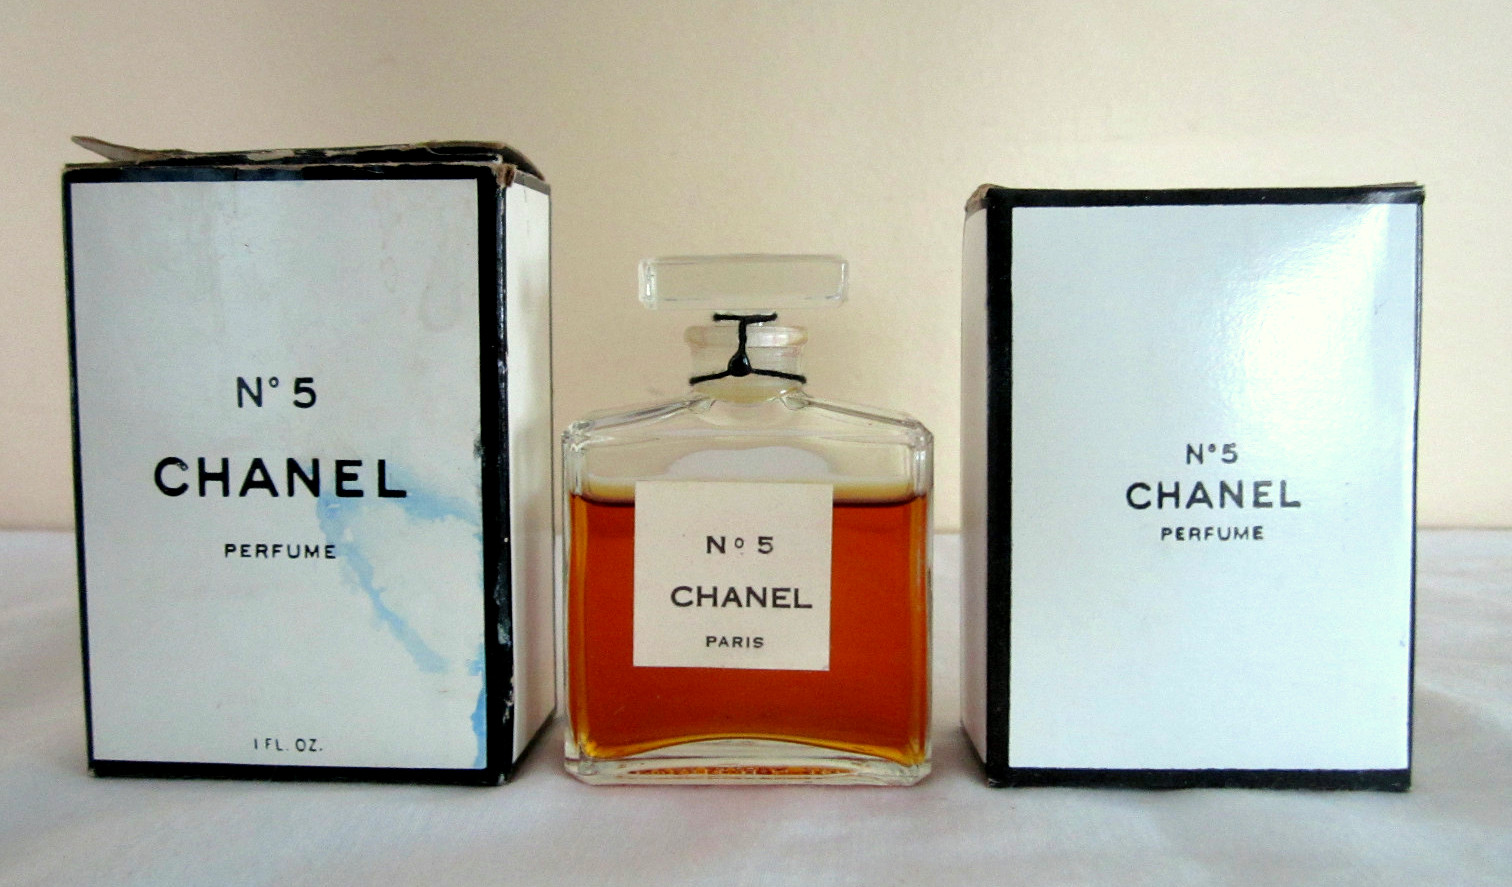 Chanel Perfume Bottles: Anatomy of a Fake Chanel Perfume Bottle